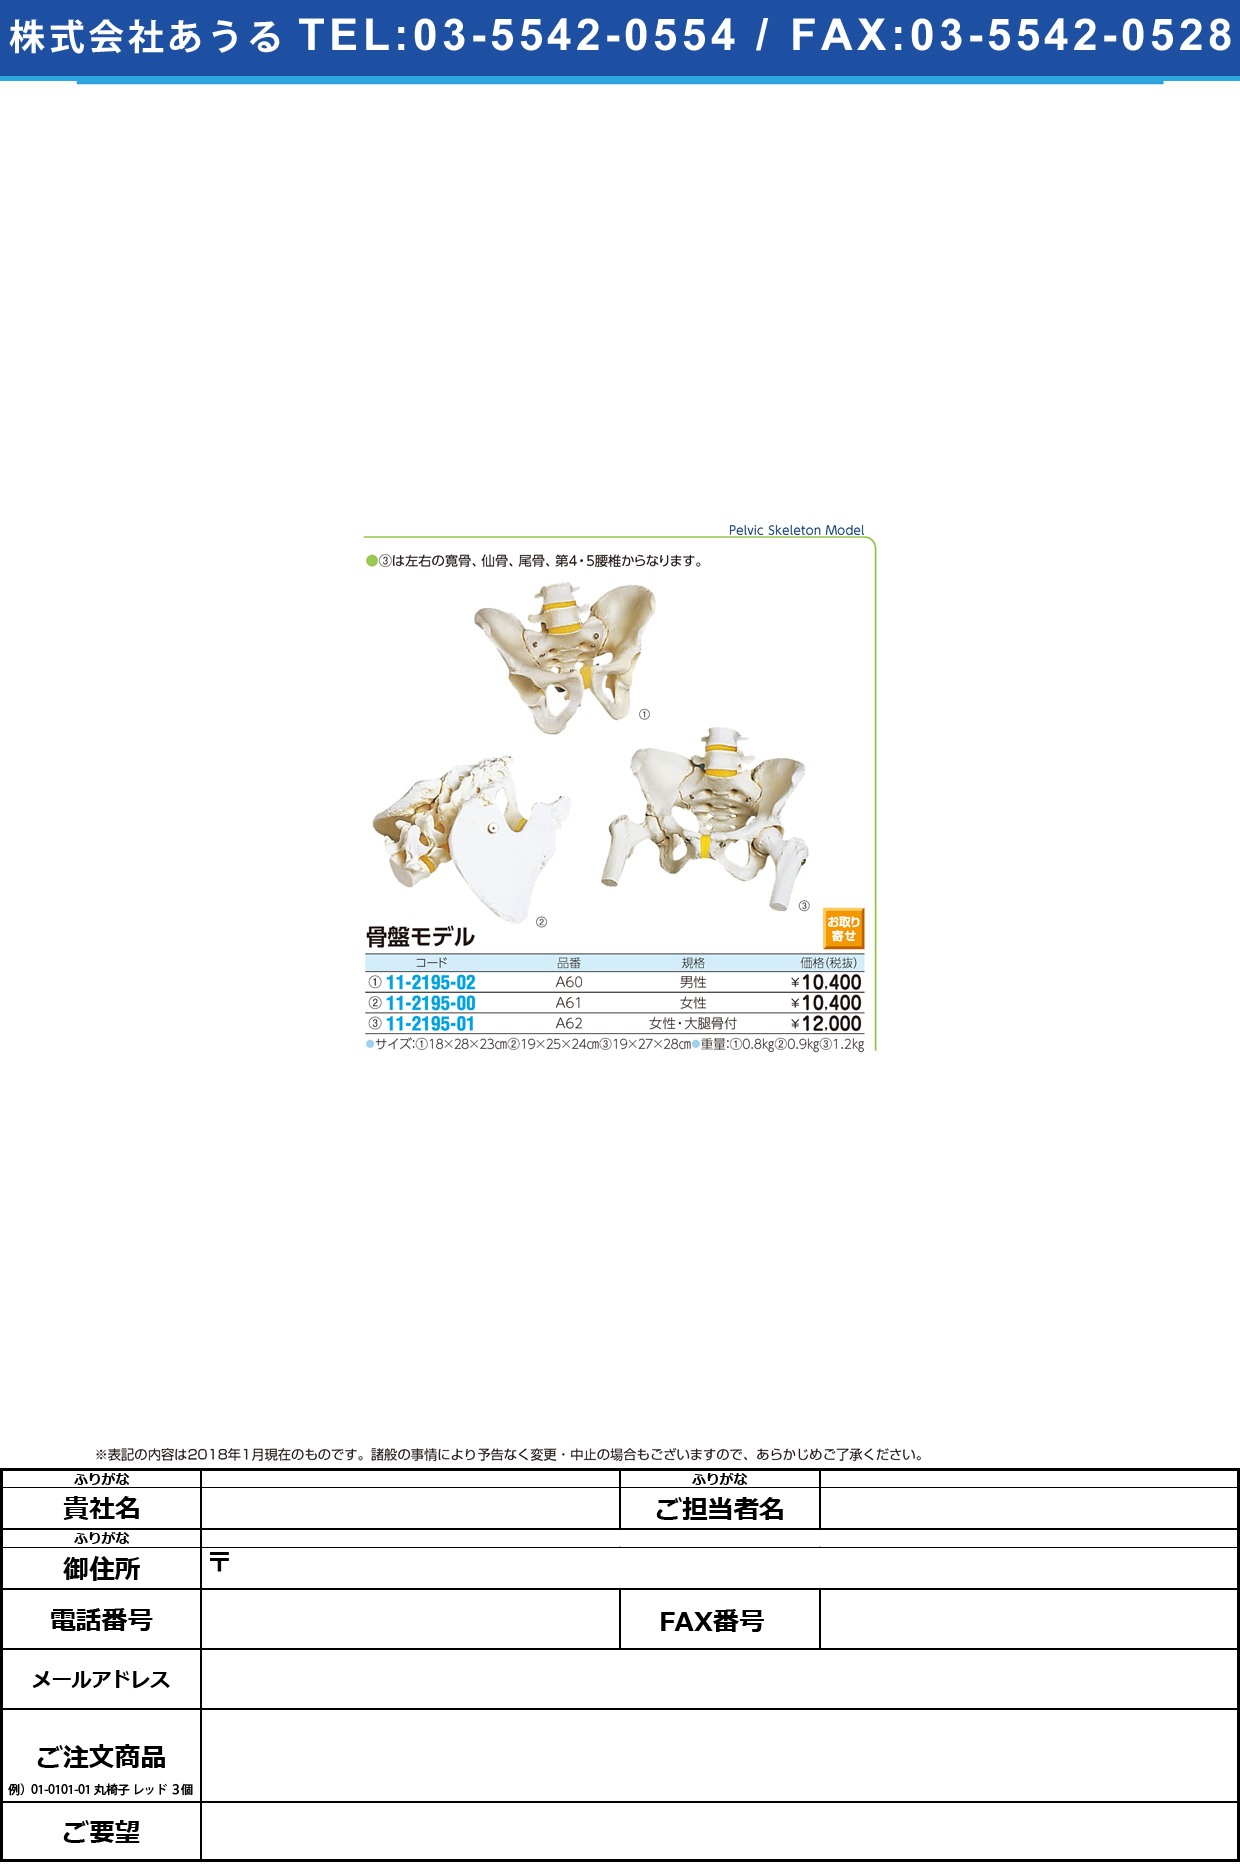 (11-2195-01)骨盤モデル（女性・大腿骨付） A62(30X30X20CM) ｺﾂﾊﾞﾝﾓﾃﾞﾙ(京都科学)【1台単位】【2019年カタログ商品】